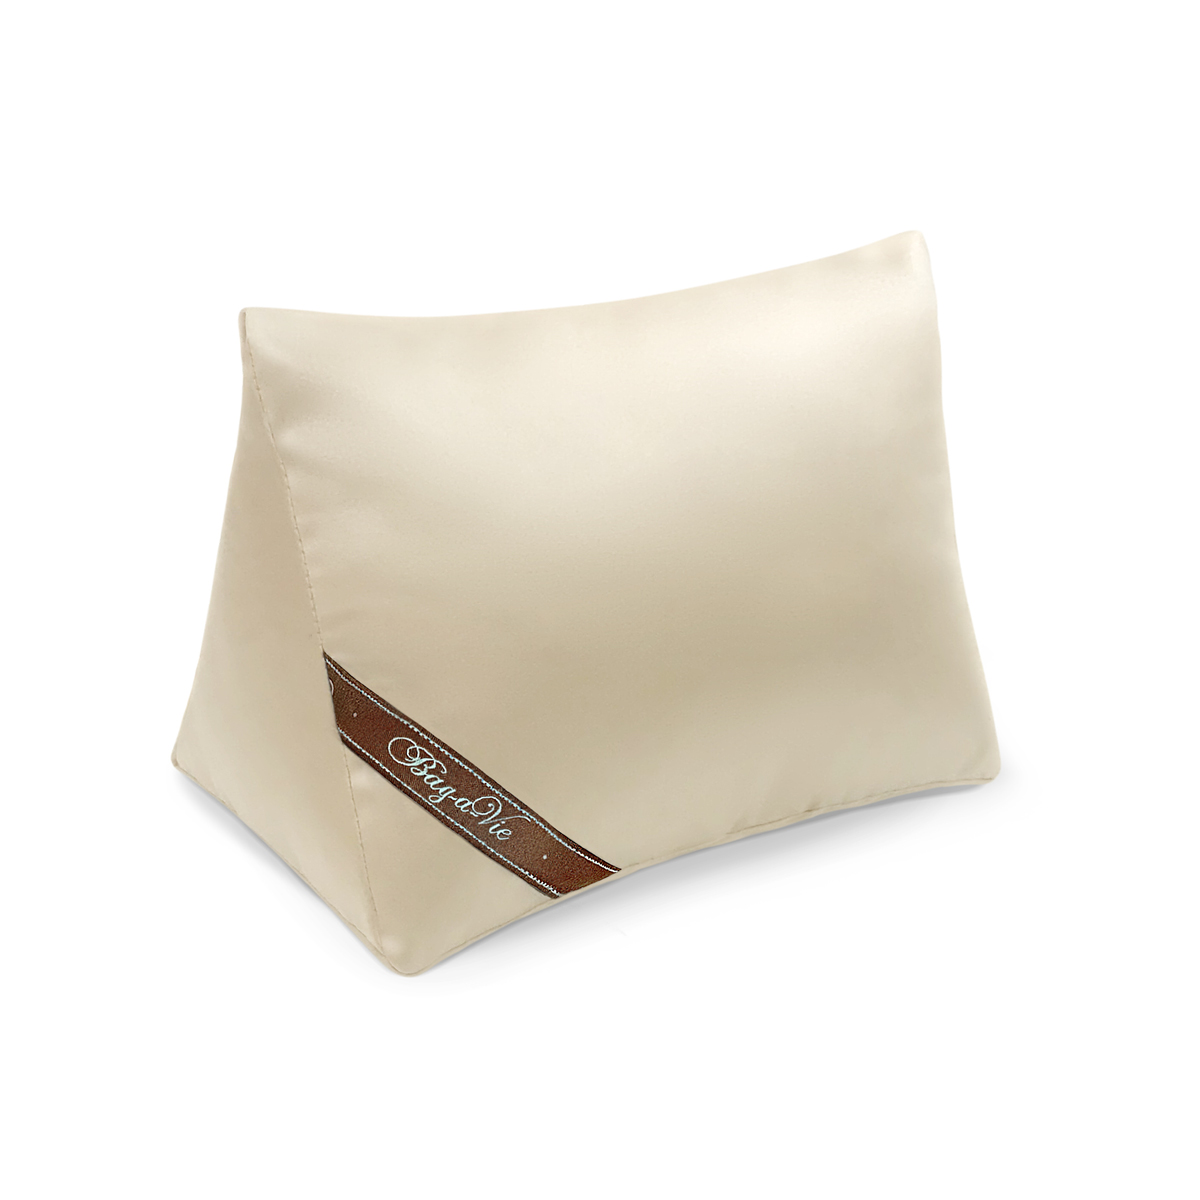 Purse Bag Pillow Shaper Insert, Handbag Shaper Protector For Hermes Bi –  ztujo